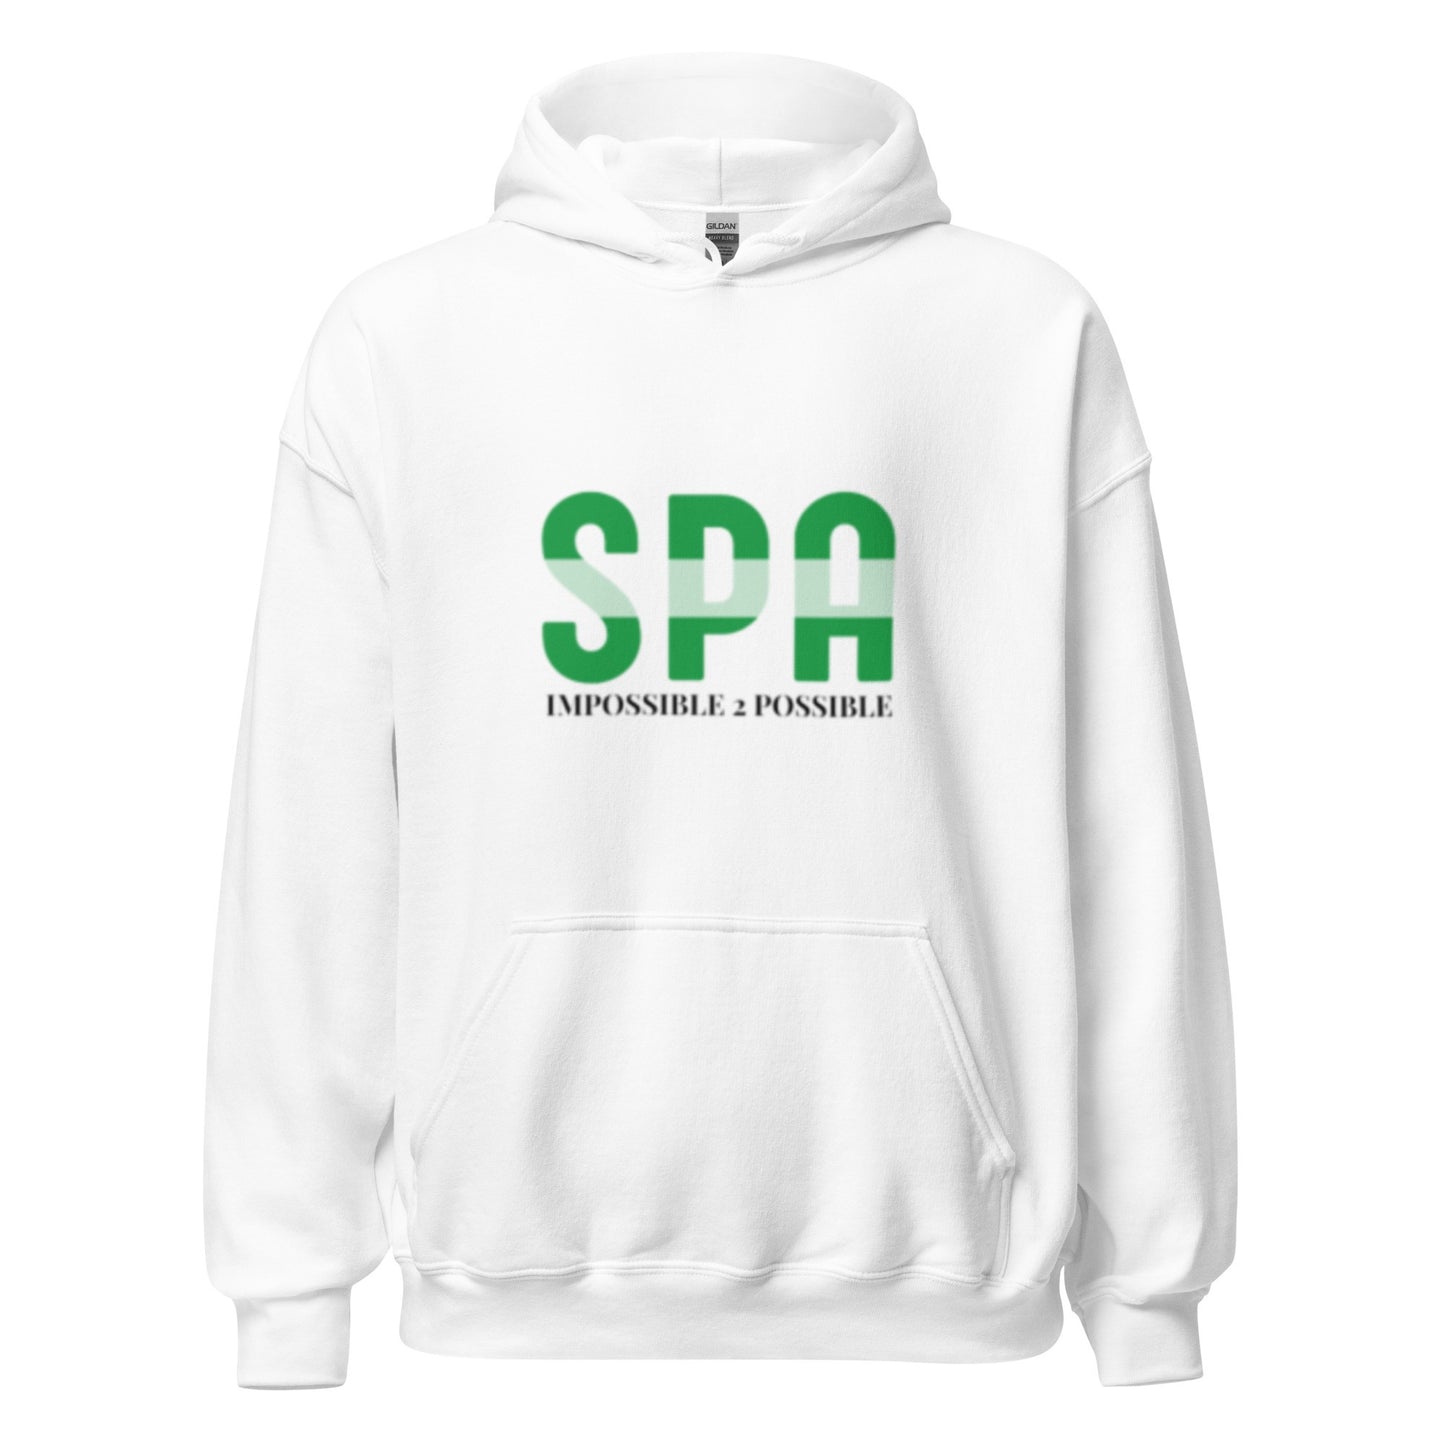 SPA Merchandise - "Impossible 2 Possible" Hoodie - SPA Merchandise 